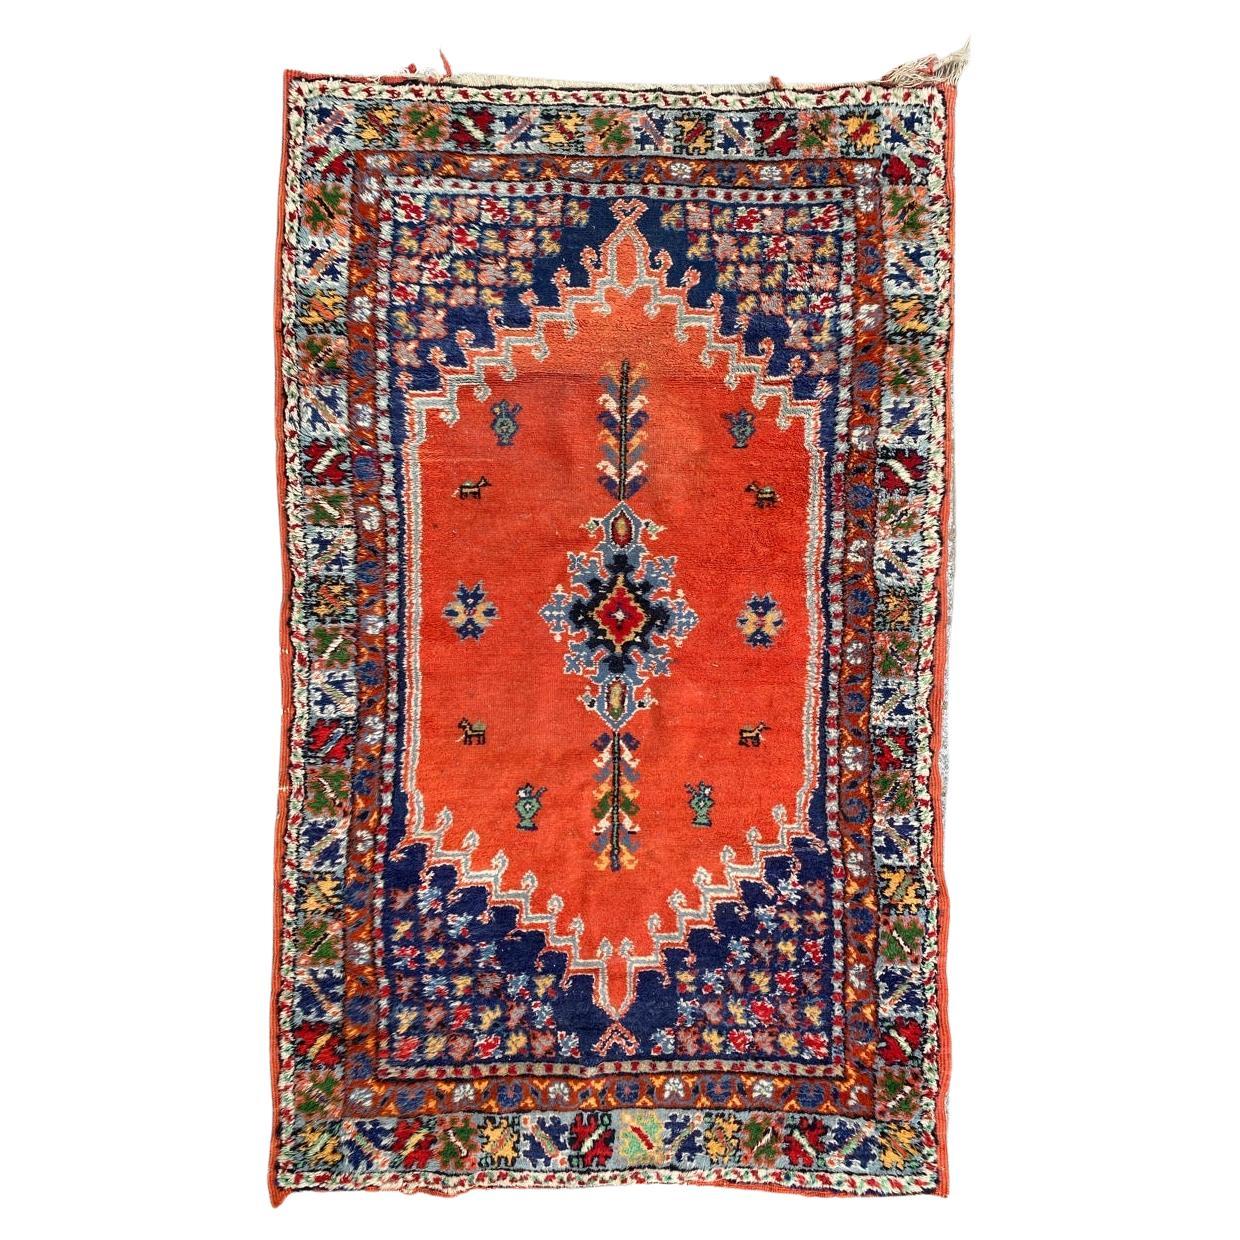 Le joli tapis marocain vintage de Bobyrug en vente